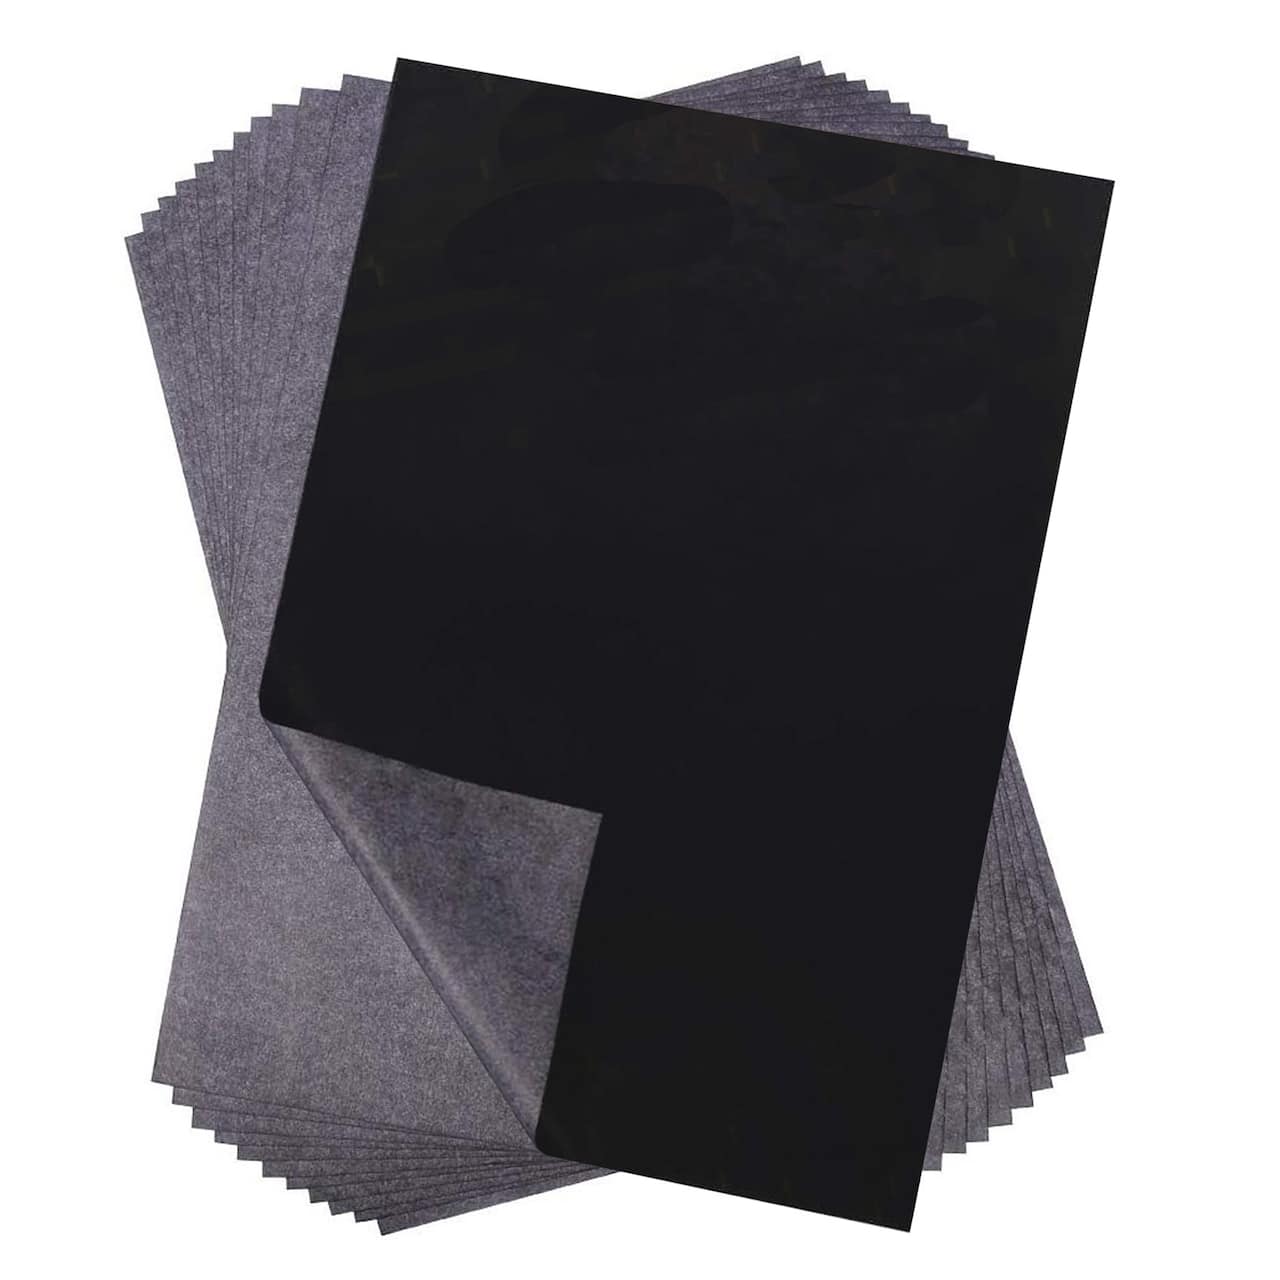 Pro Art® Black Carbon Transfer Paper, 18 x 26